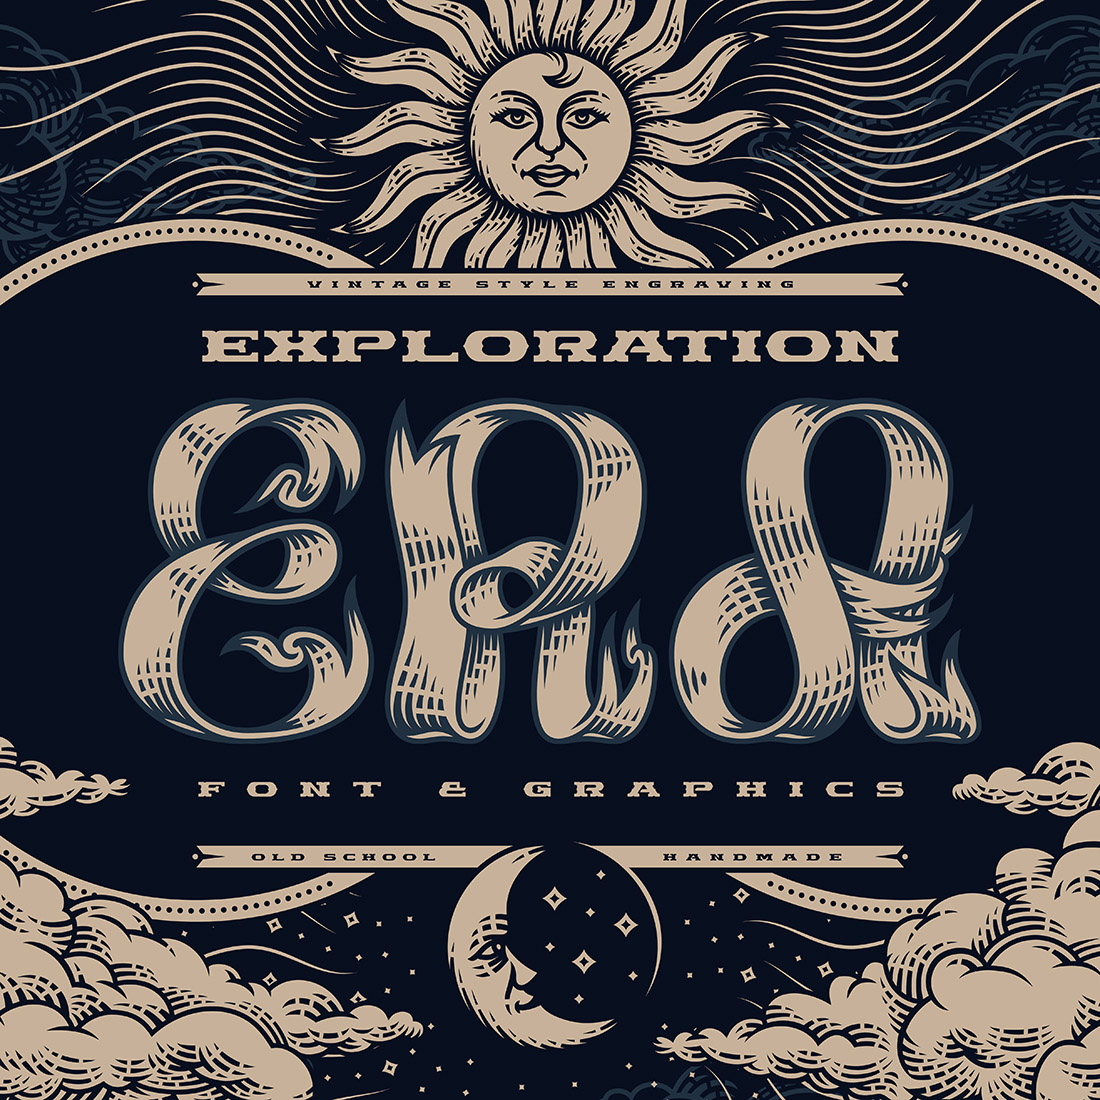 Exploration Era — Font & Graphics cover image.